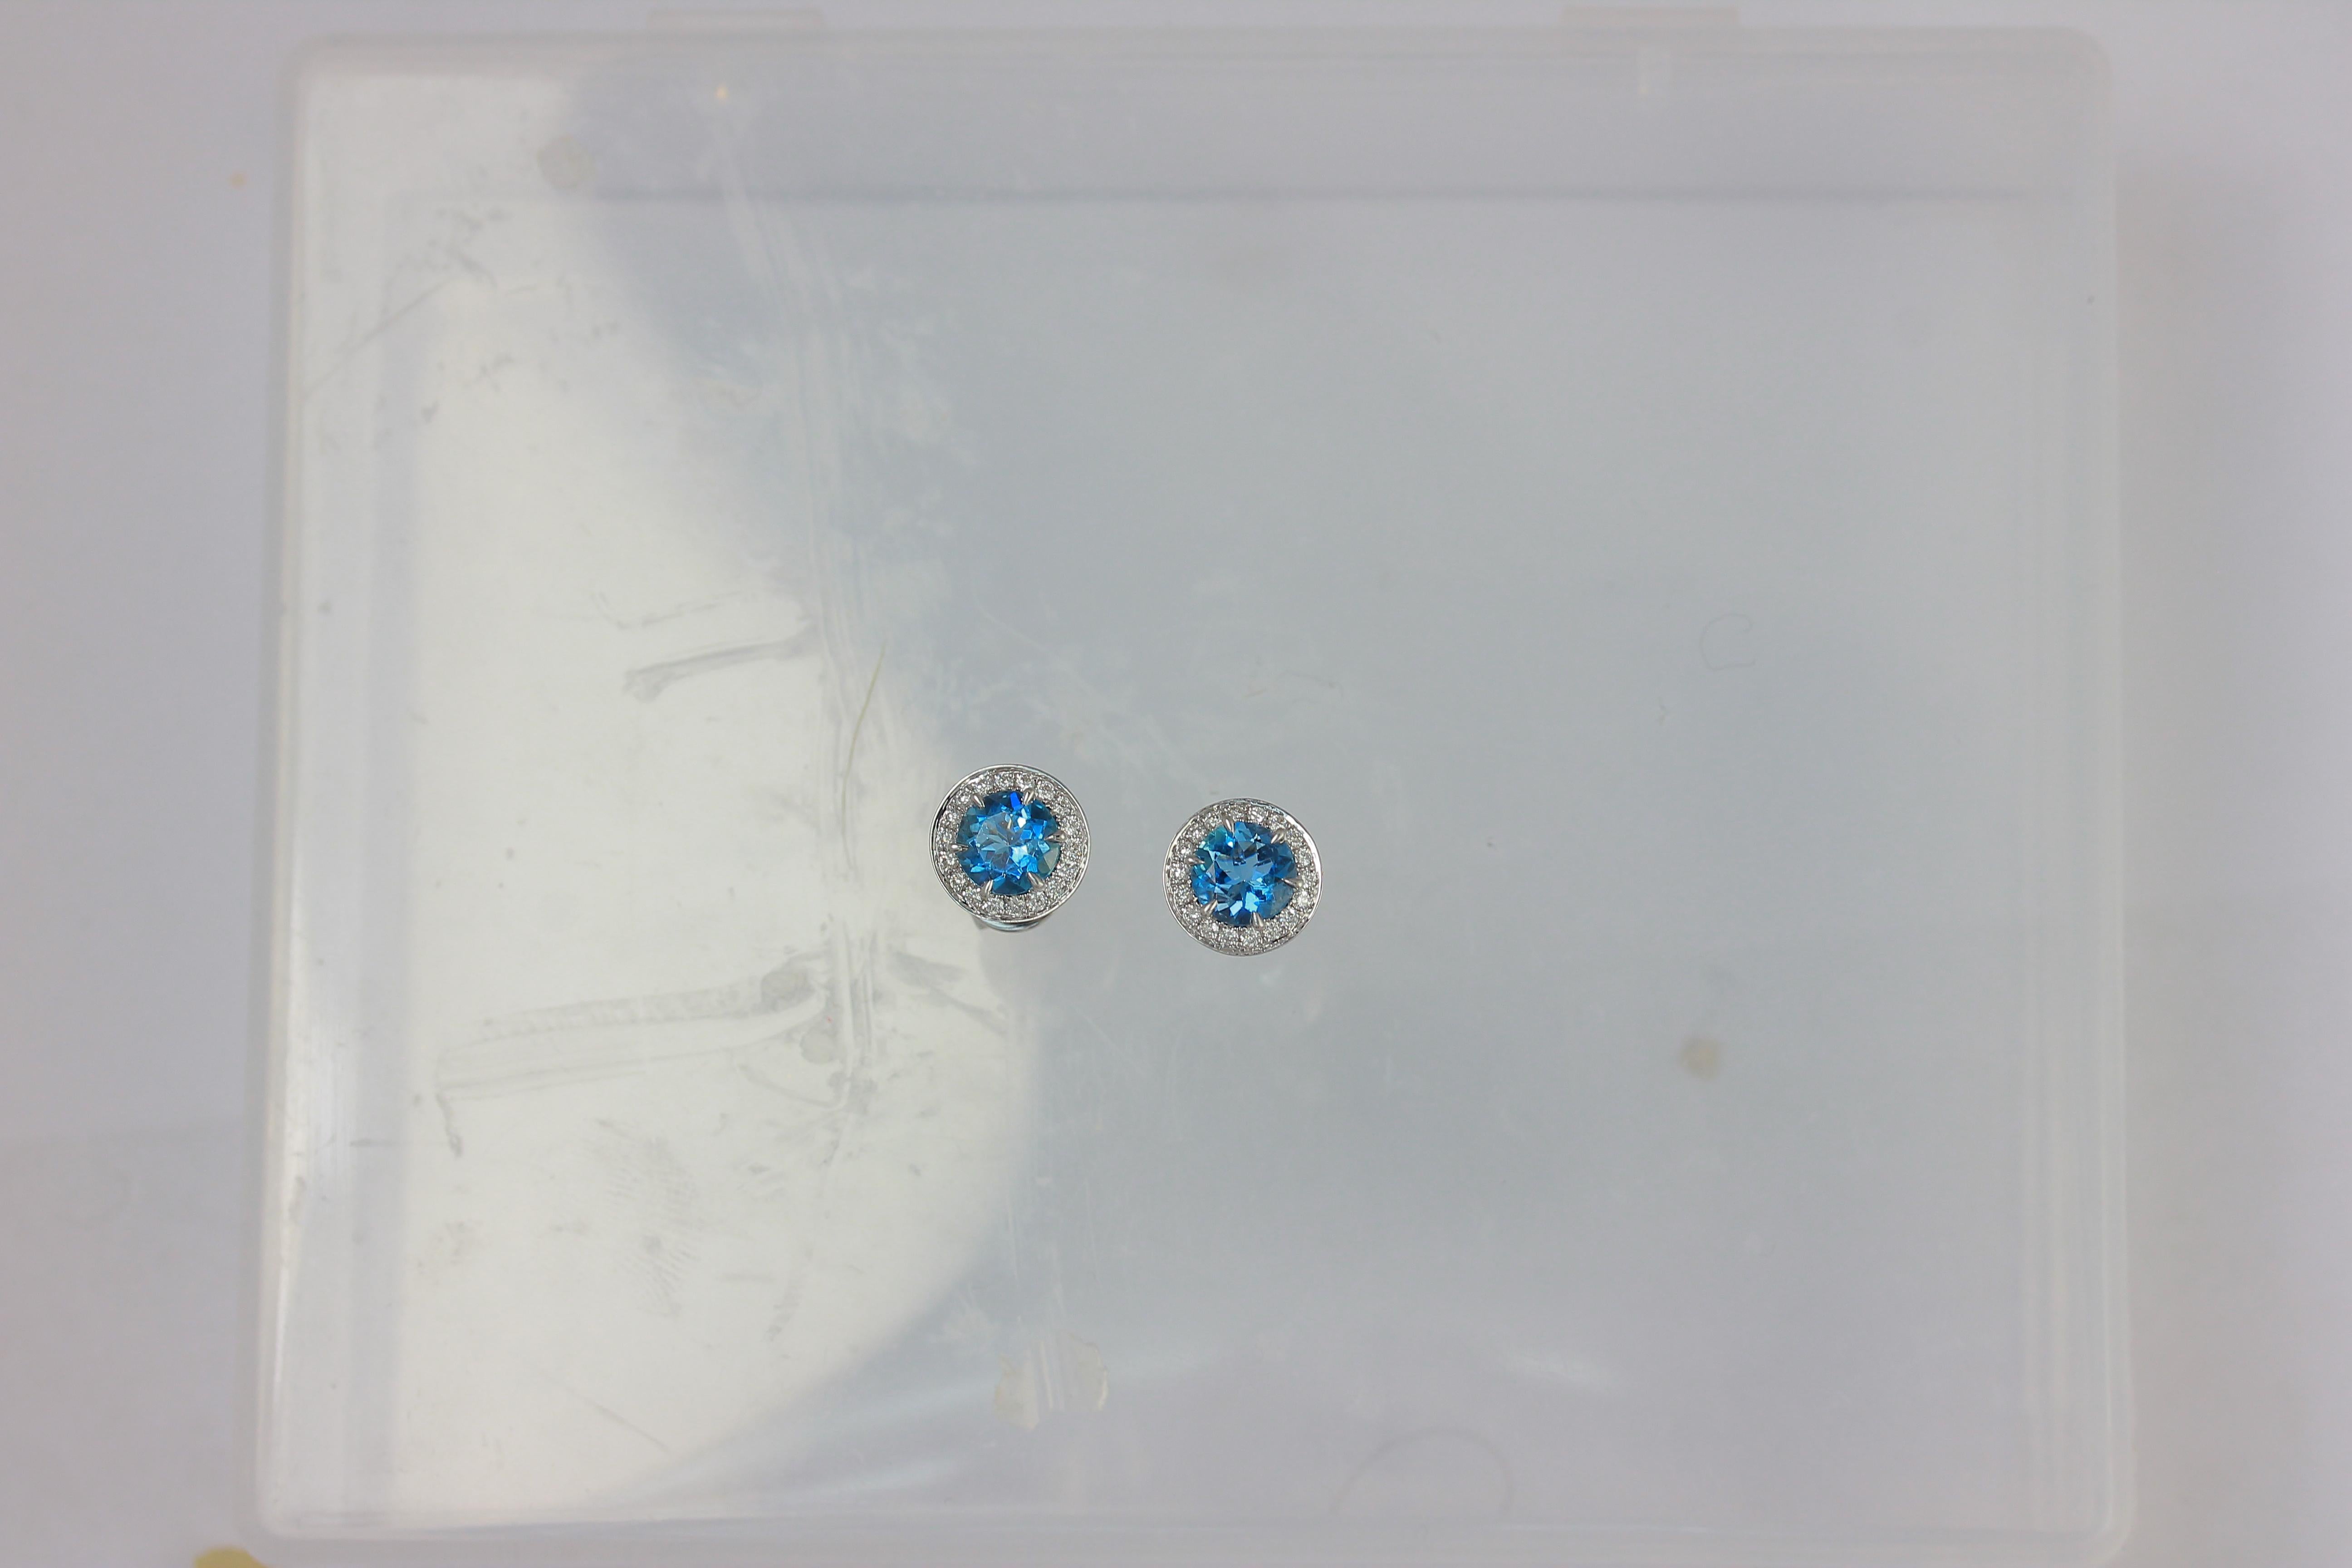 Contemporary Frederic Sage 1.05 Carat Round Aquamarine Diamond Studs